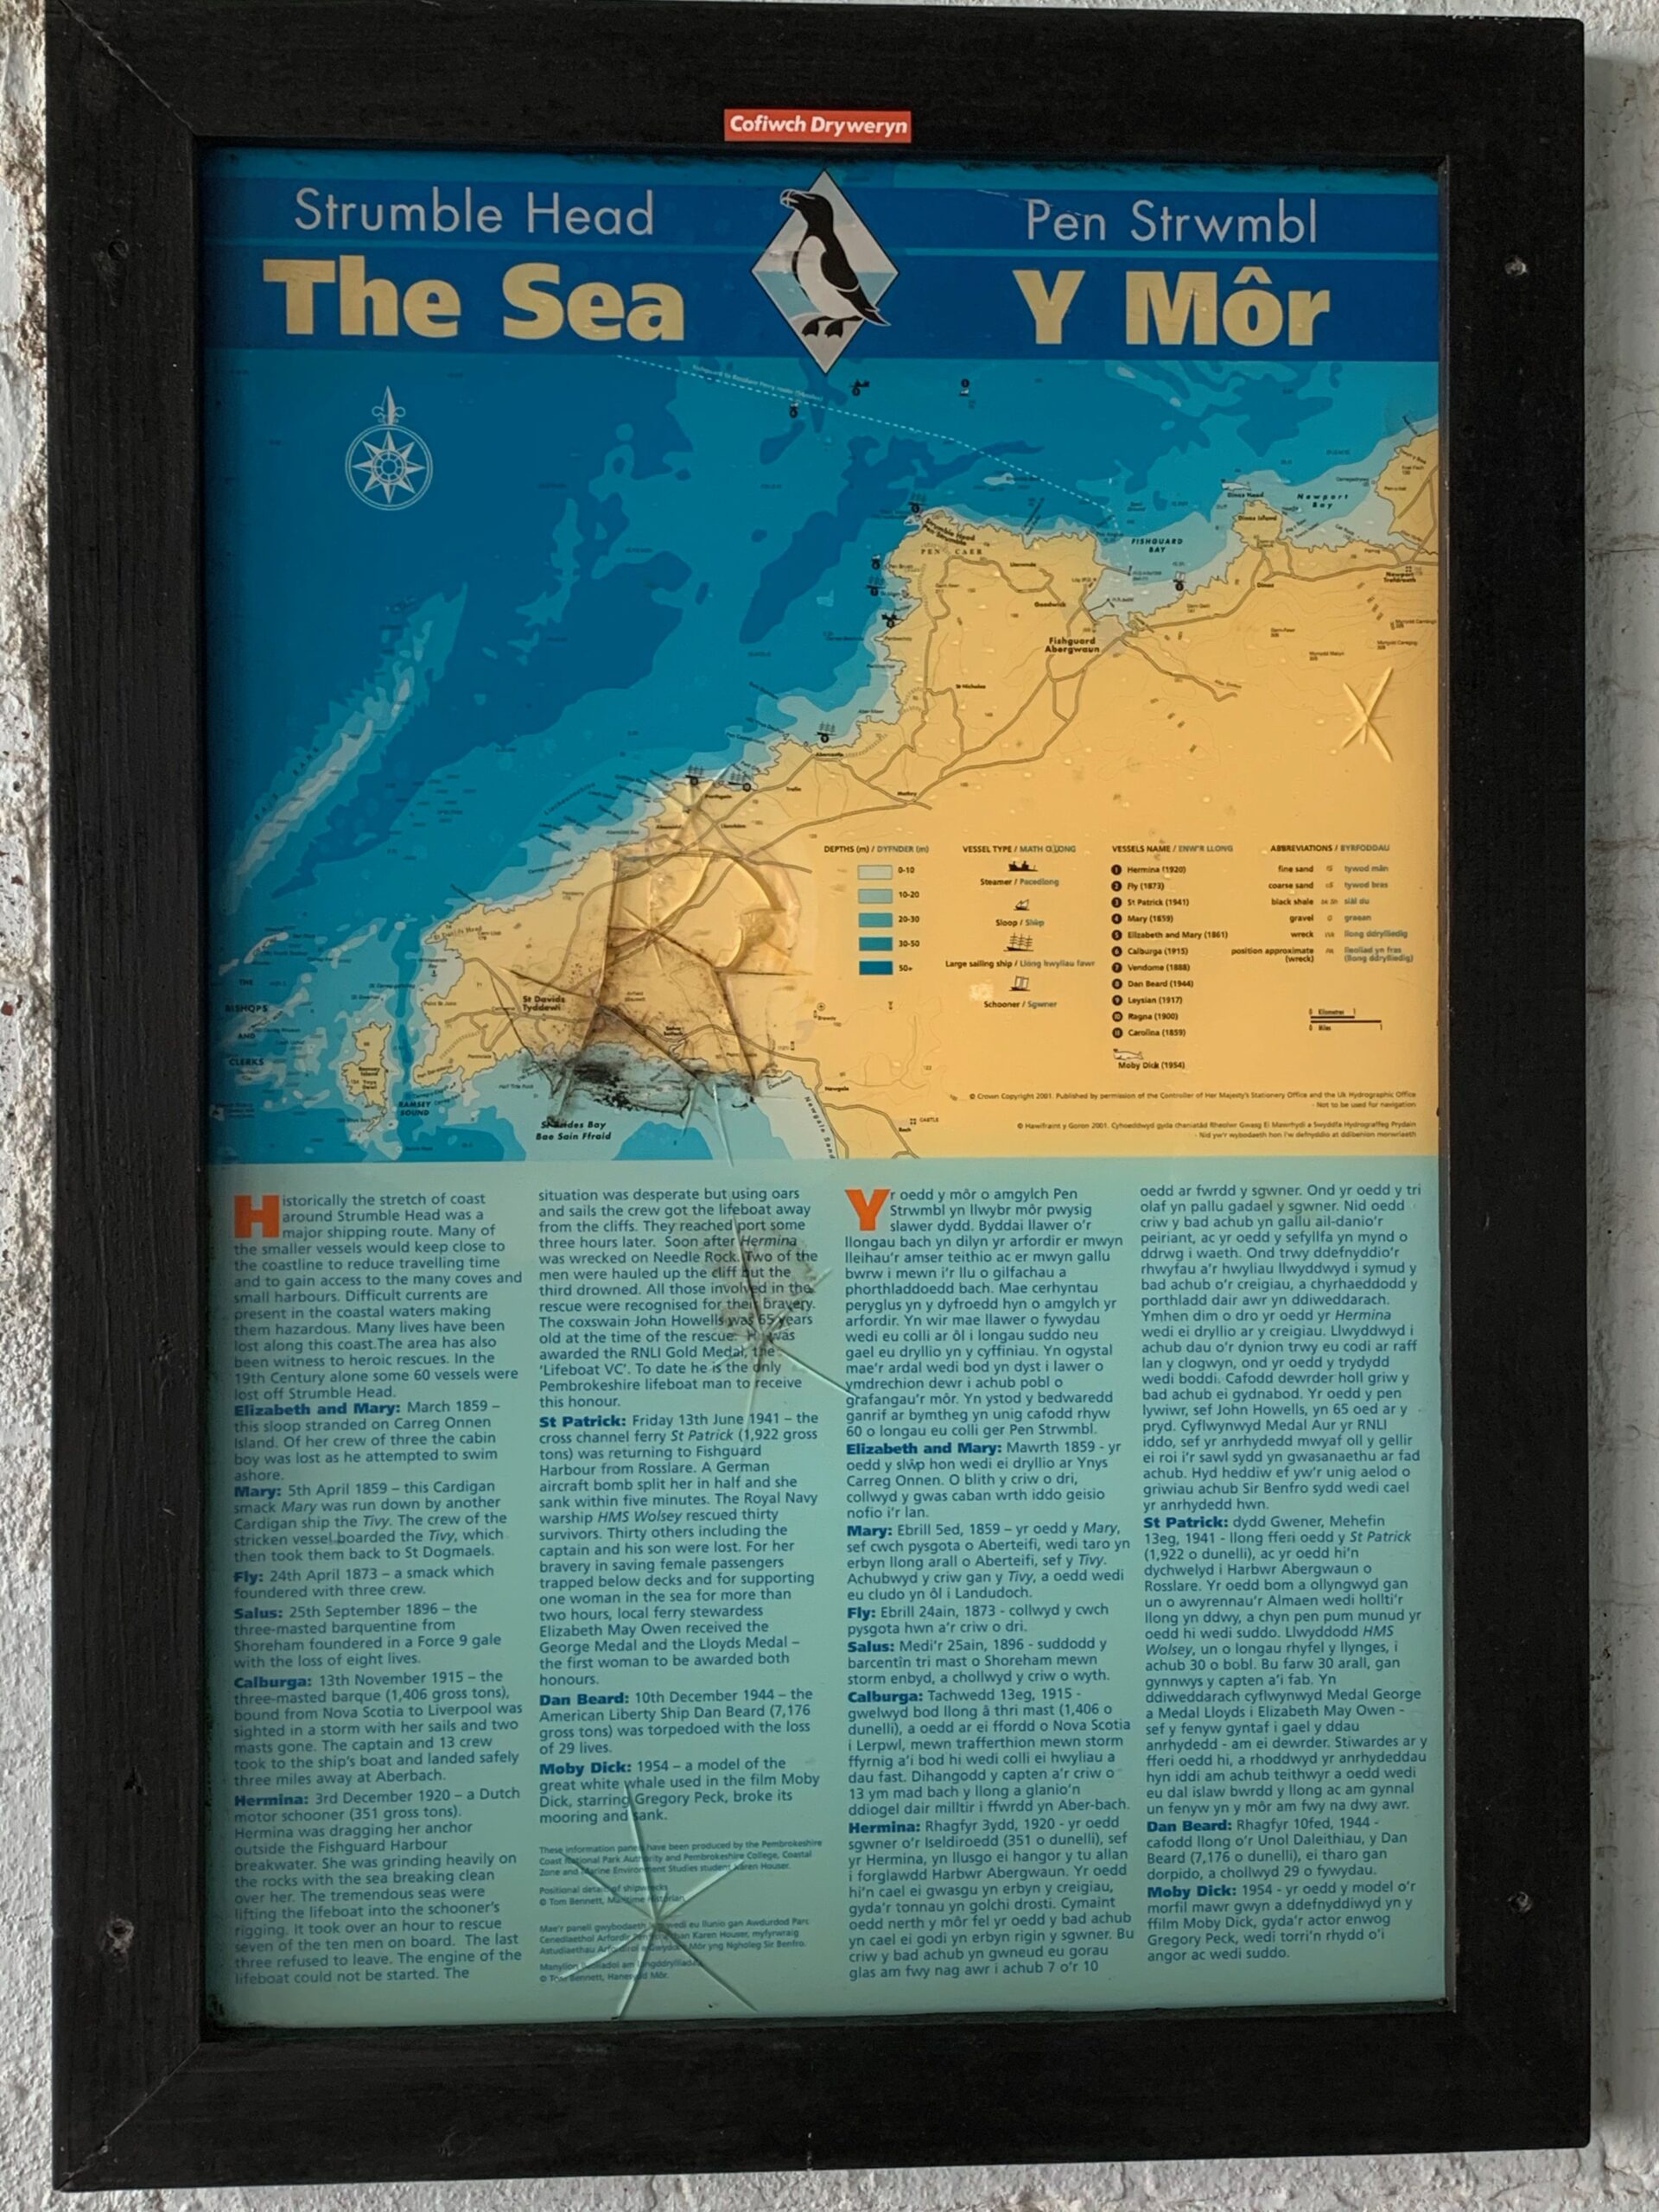 Strumble Head "The Sea" poster.